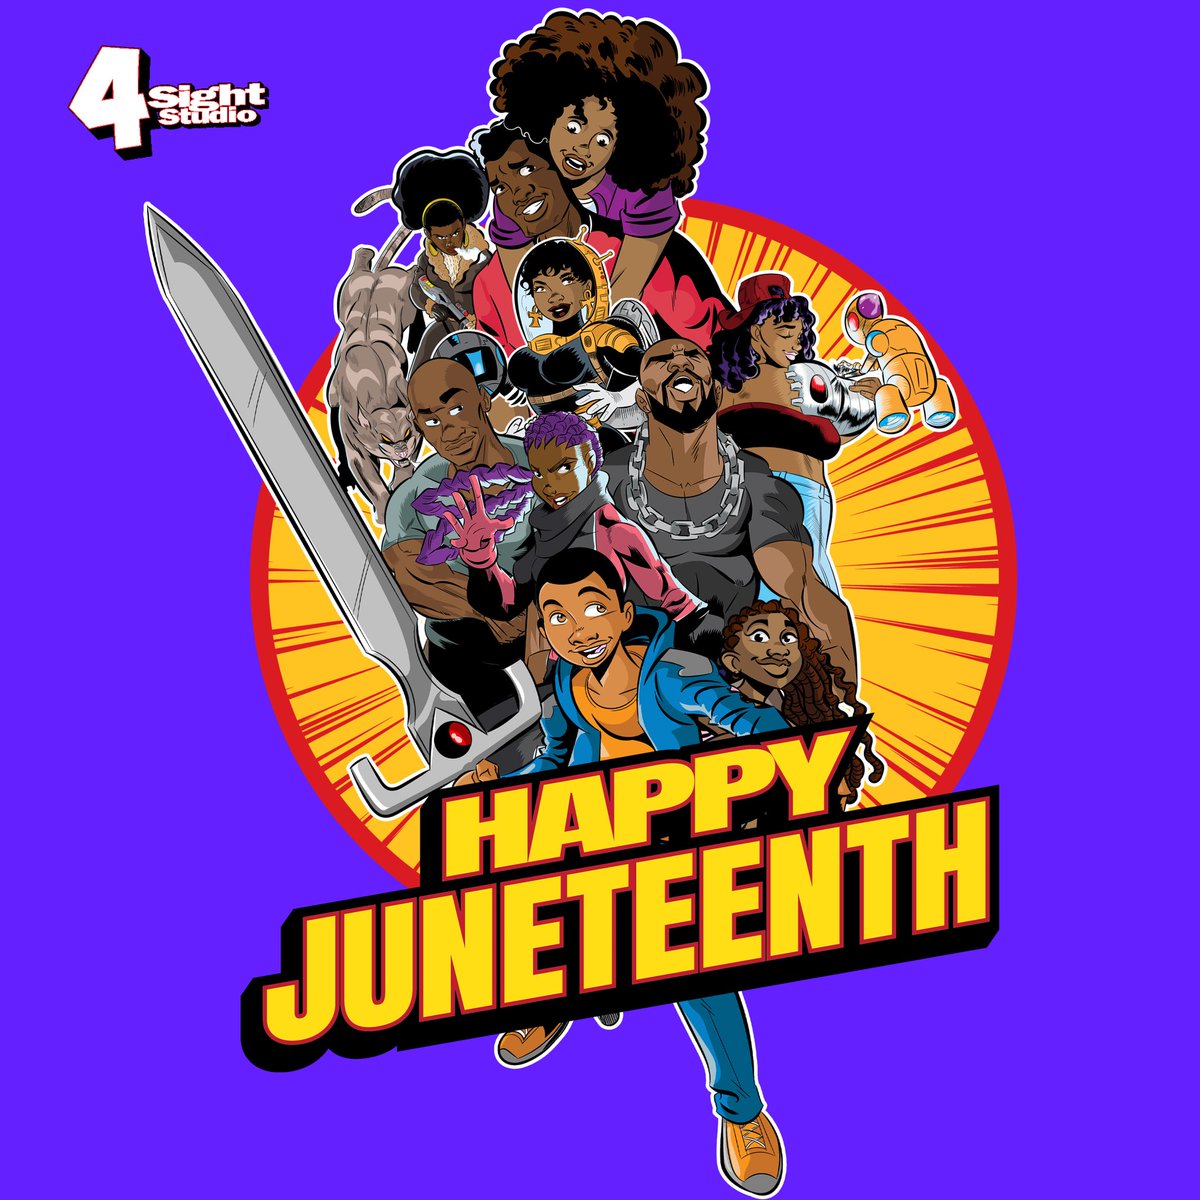 Happy Juneteenth everyone!

#Juneteenth2023 #juneteenth #4sightstudio #blackexcellence #BlackLivesMatter #blackartists #blackcreatives #blackcharacters #blackheroesmatter